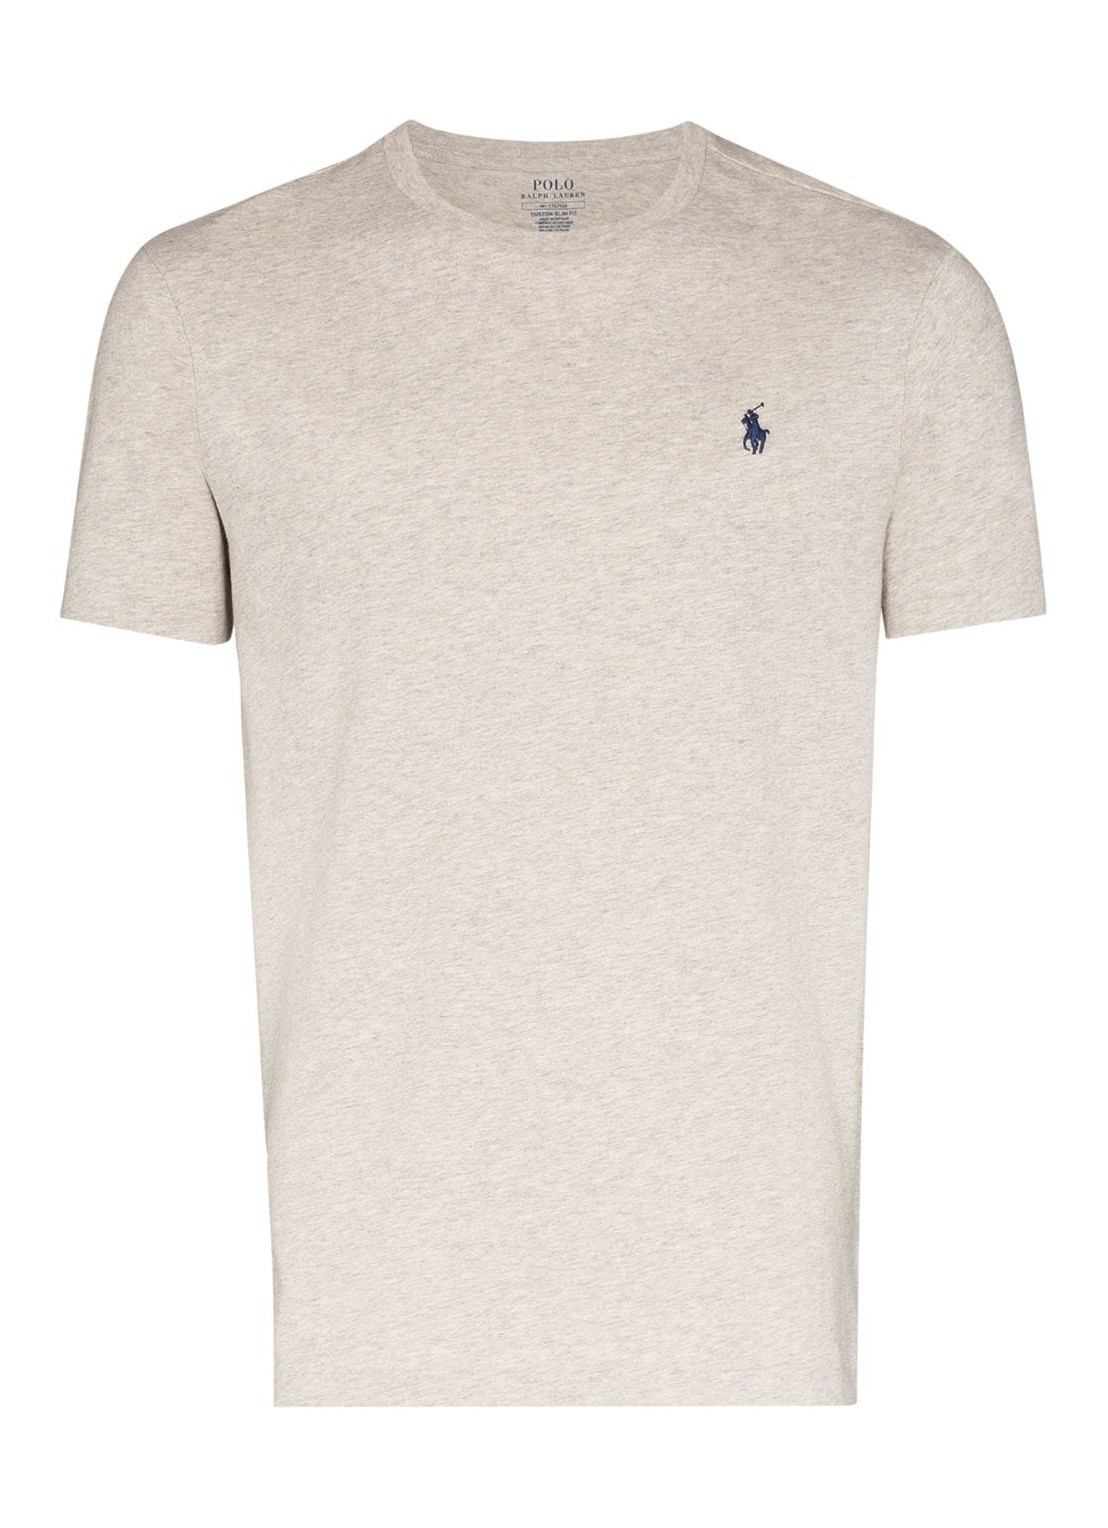 Camiseta polo ralph lauren jersey ssl tshirt - 710680785002 new grey heather talla XL
 